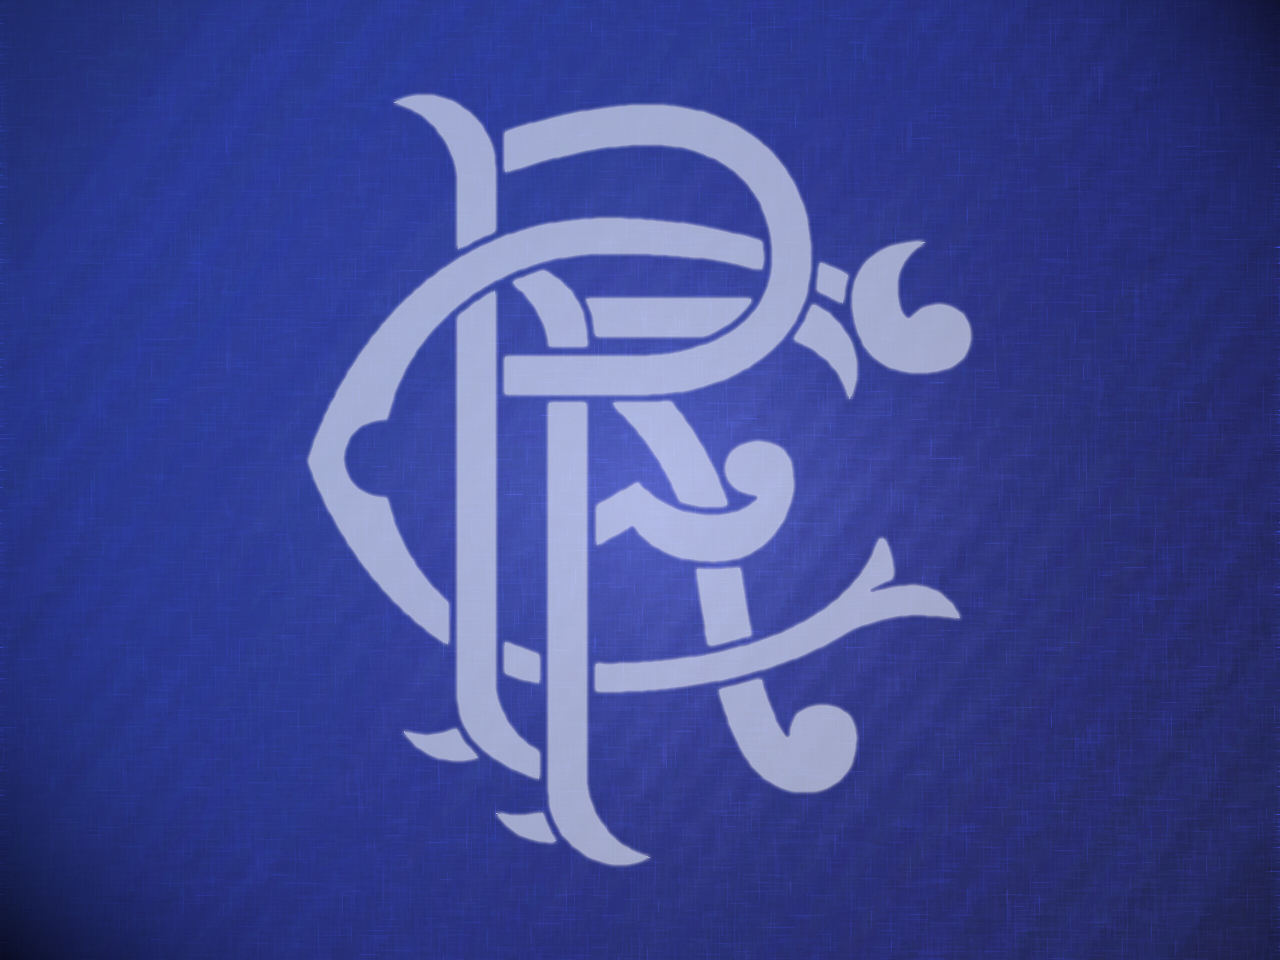 Rangers F C Wikipedia The Encyclopedia Football Club Are